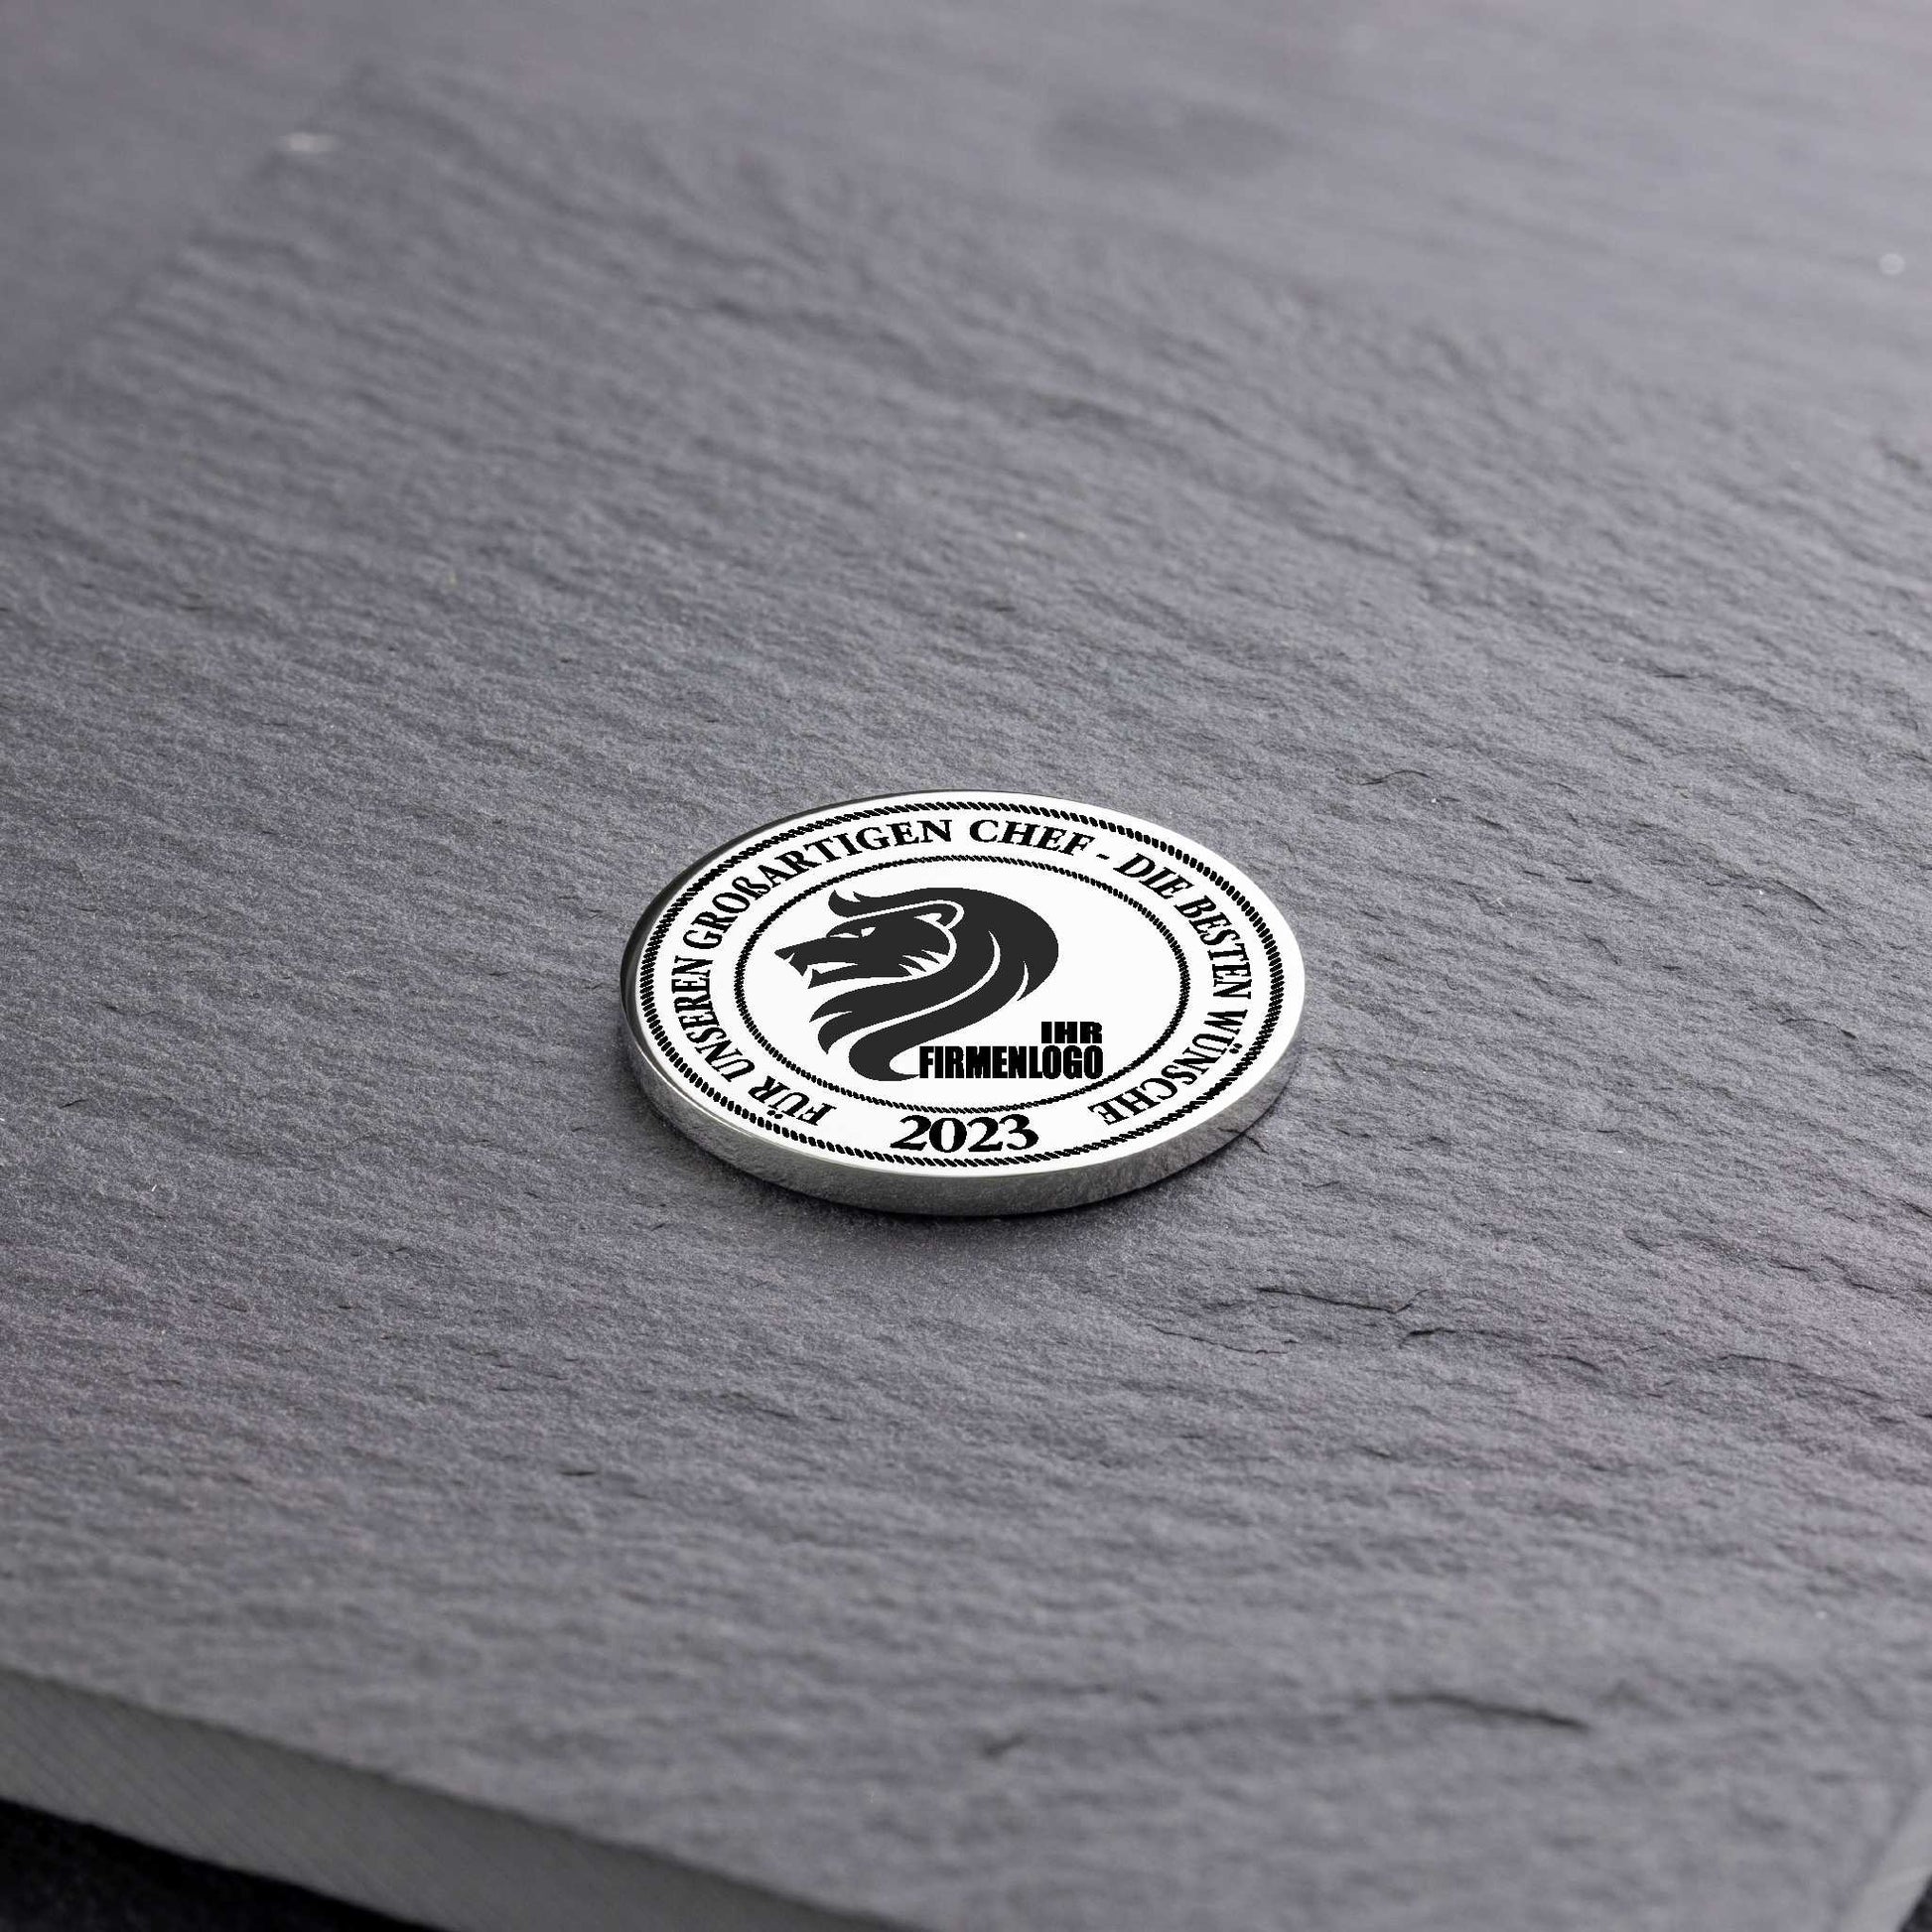 Unique Gift for Boss: Commemorative Coin - seQua.Shop